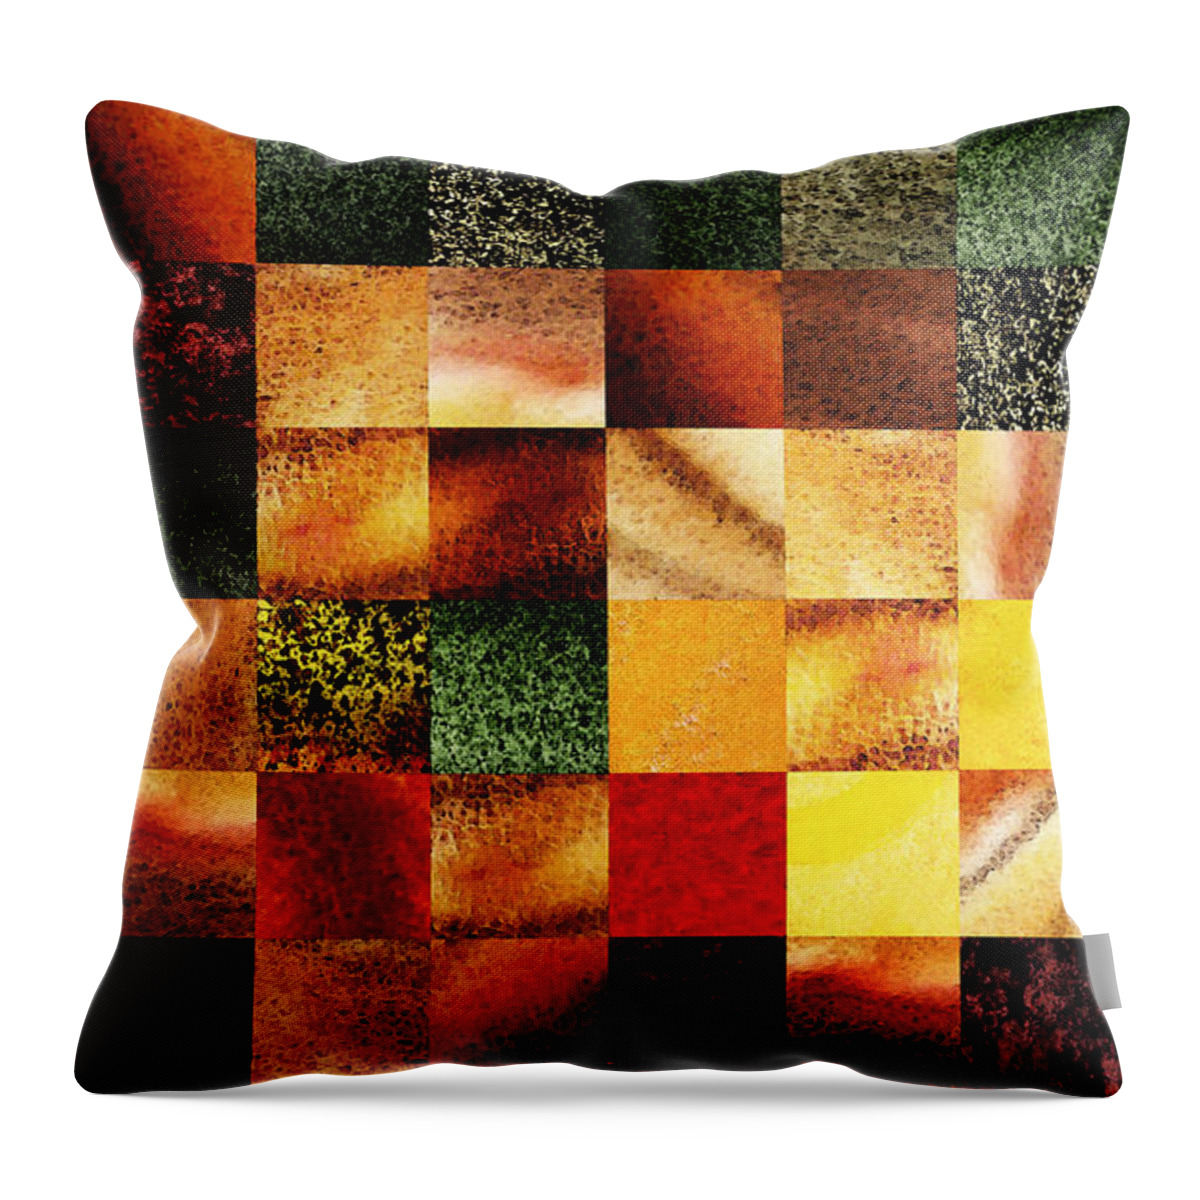 Sunset Throw Pillow featuring the painting Geometric Abstract Design Sunset Squares by Irina Sztukowski